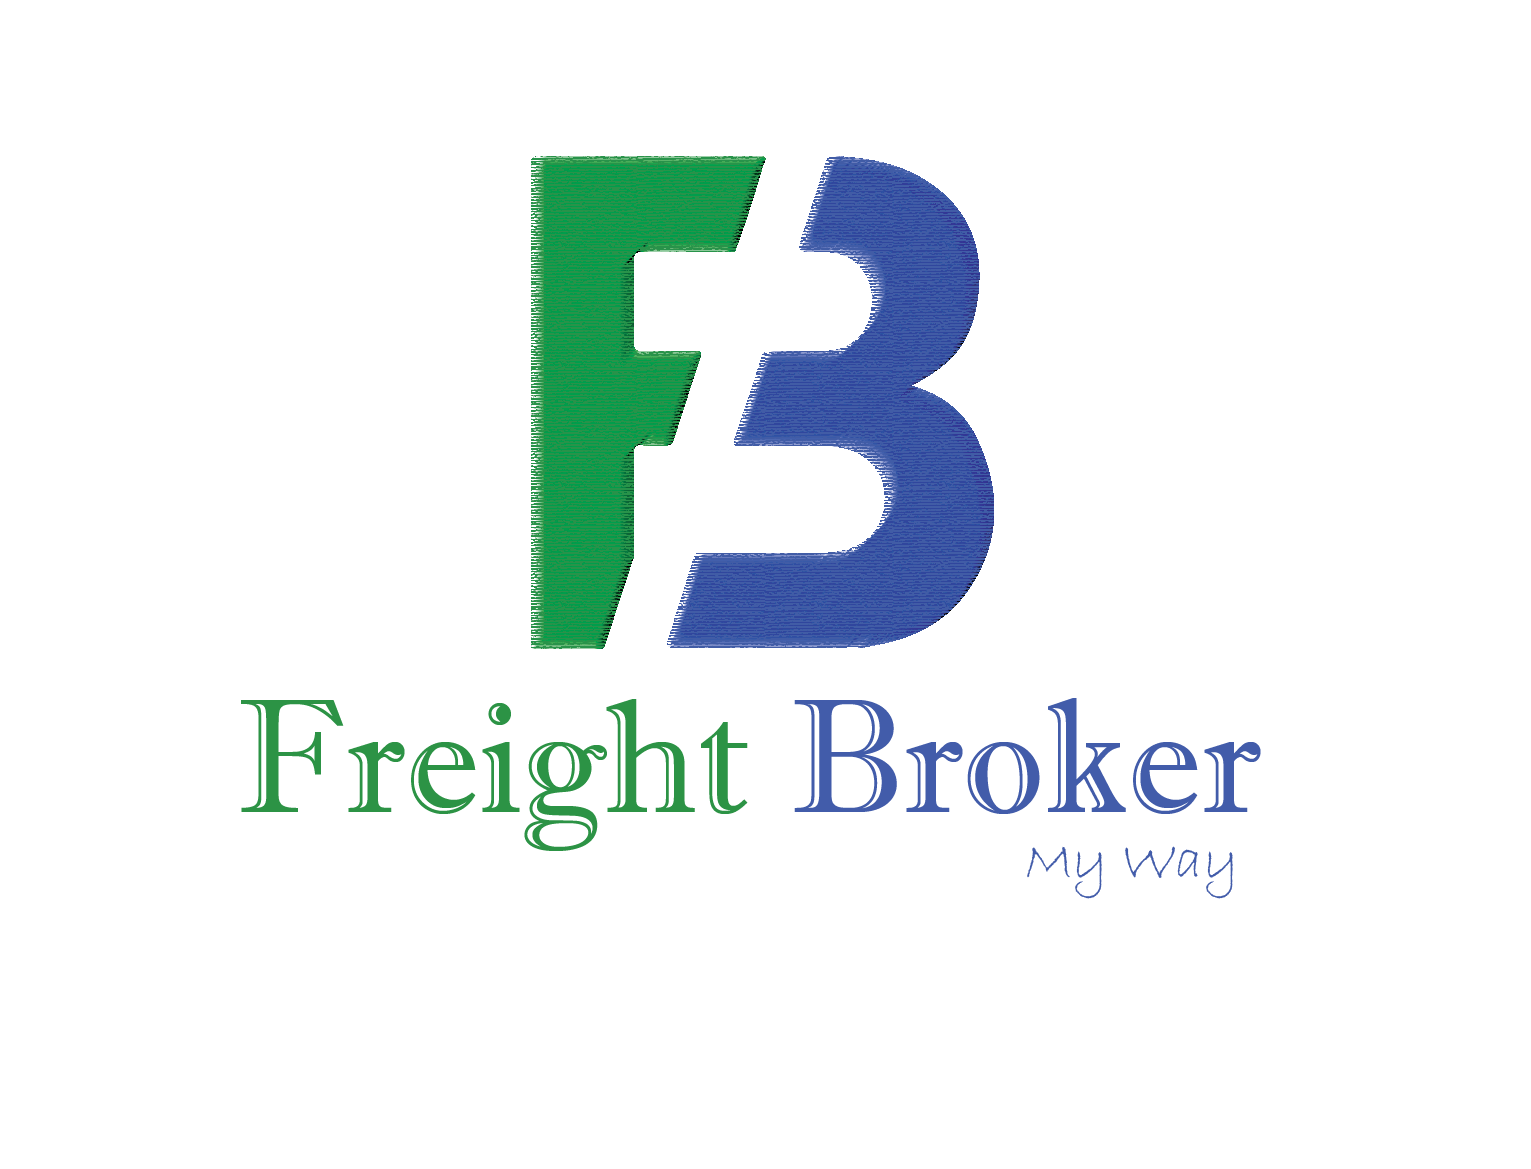 Freight Broker My Way